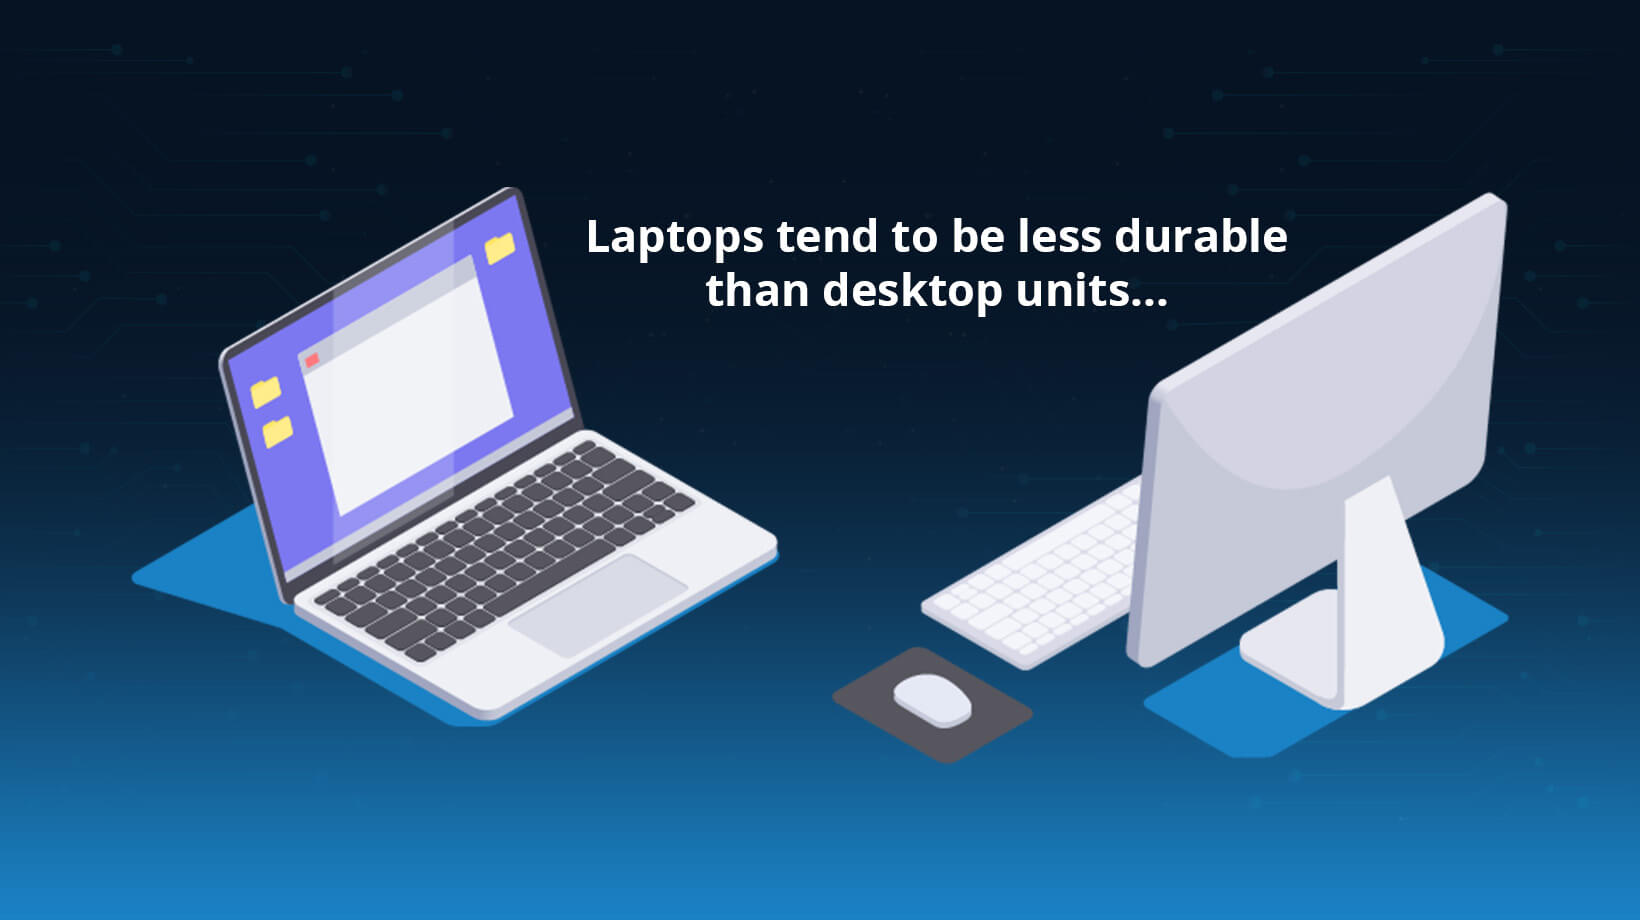 Laptopsvsdesktops